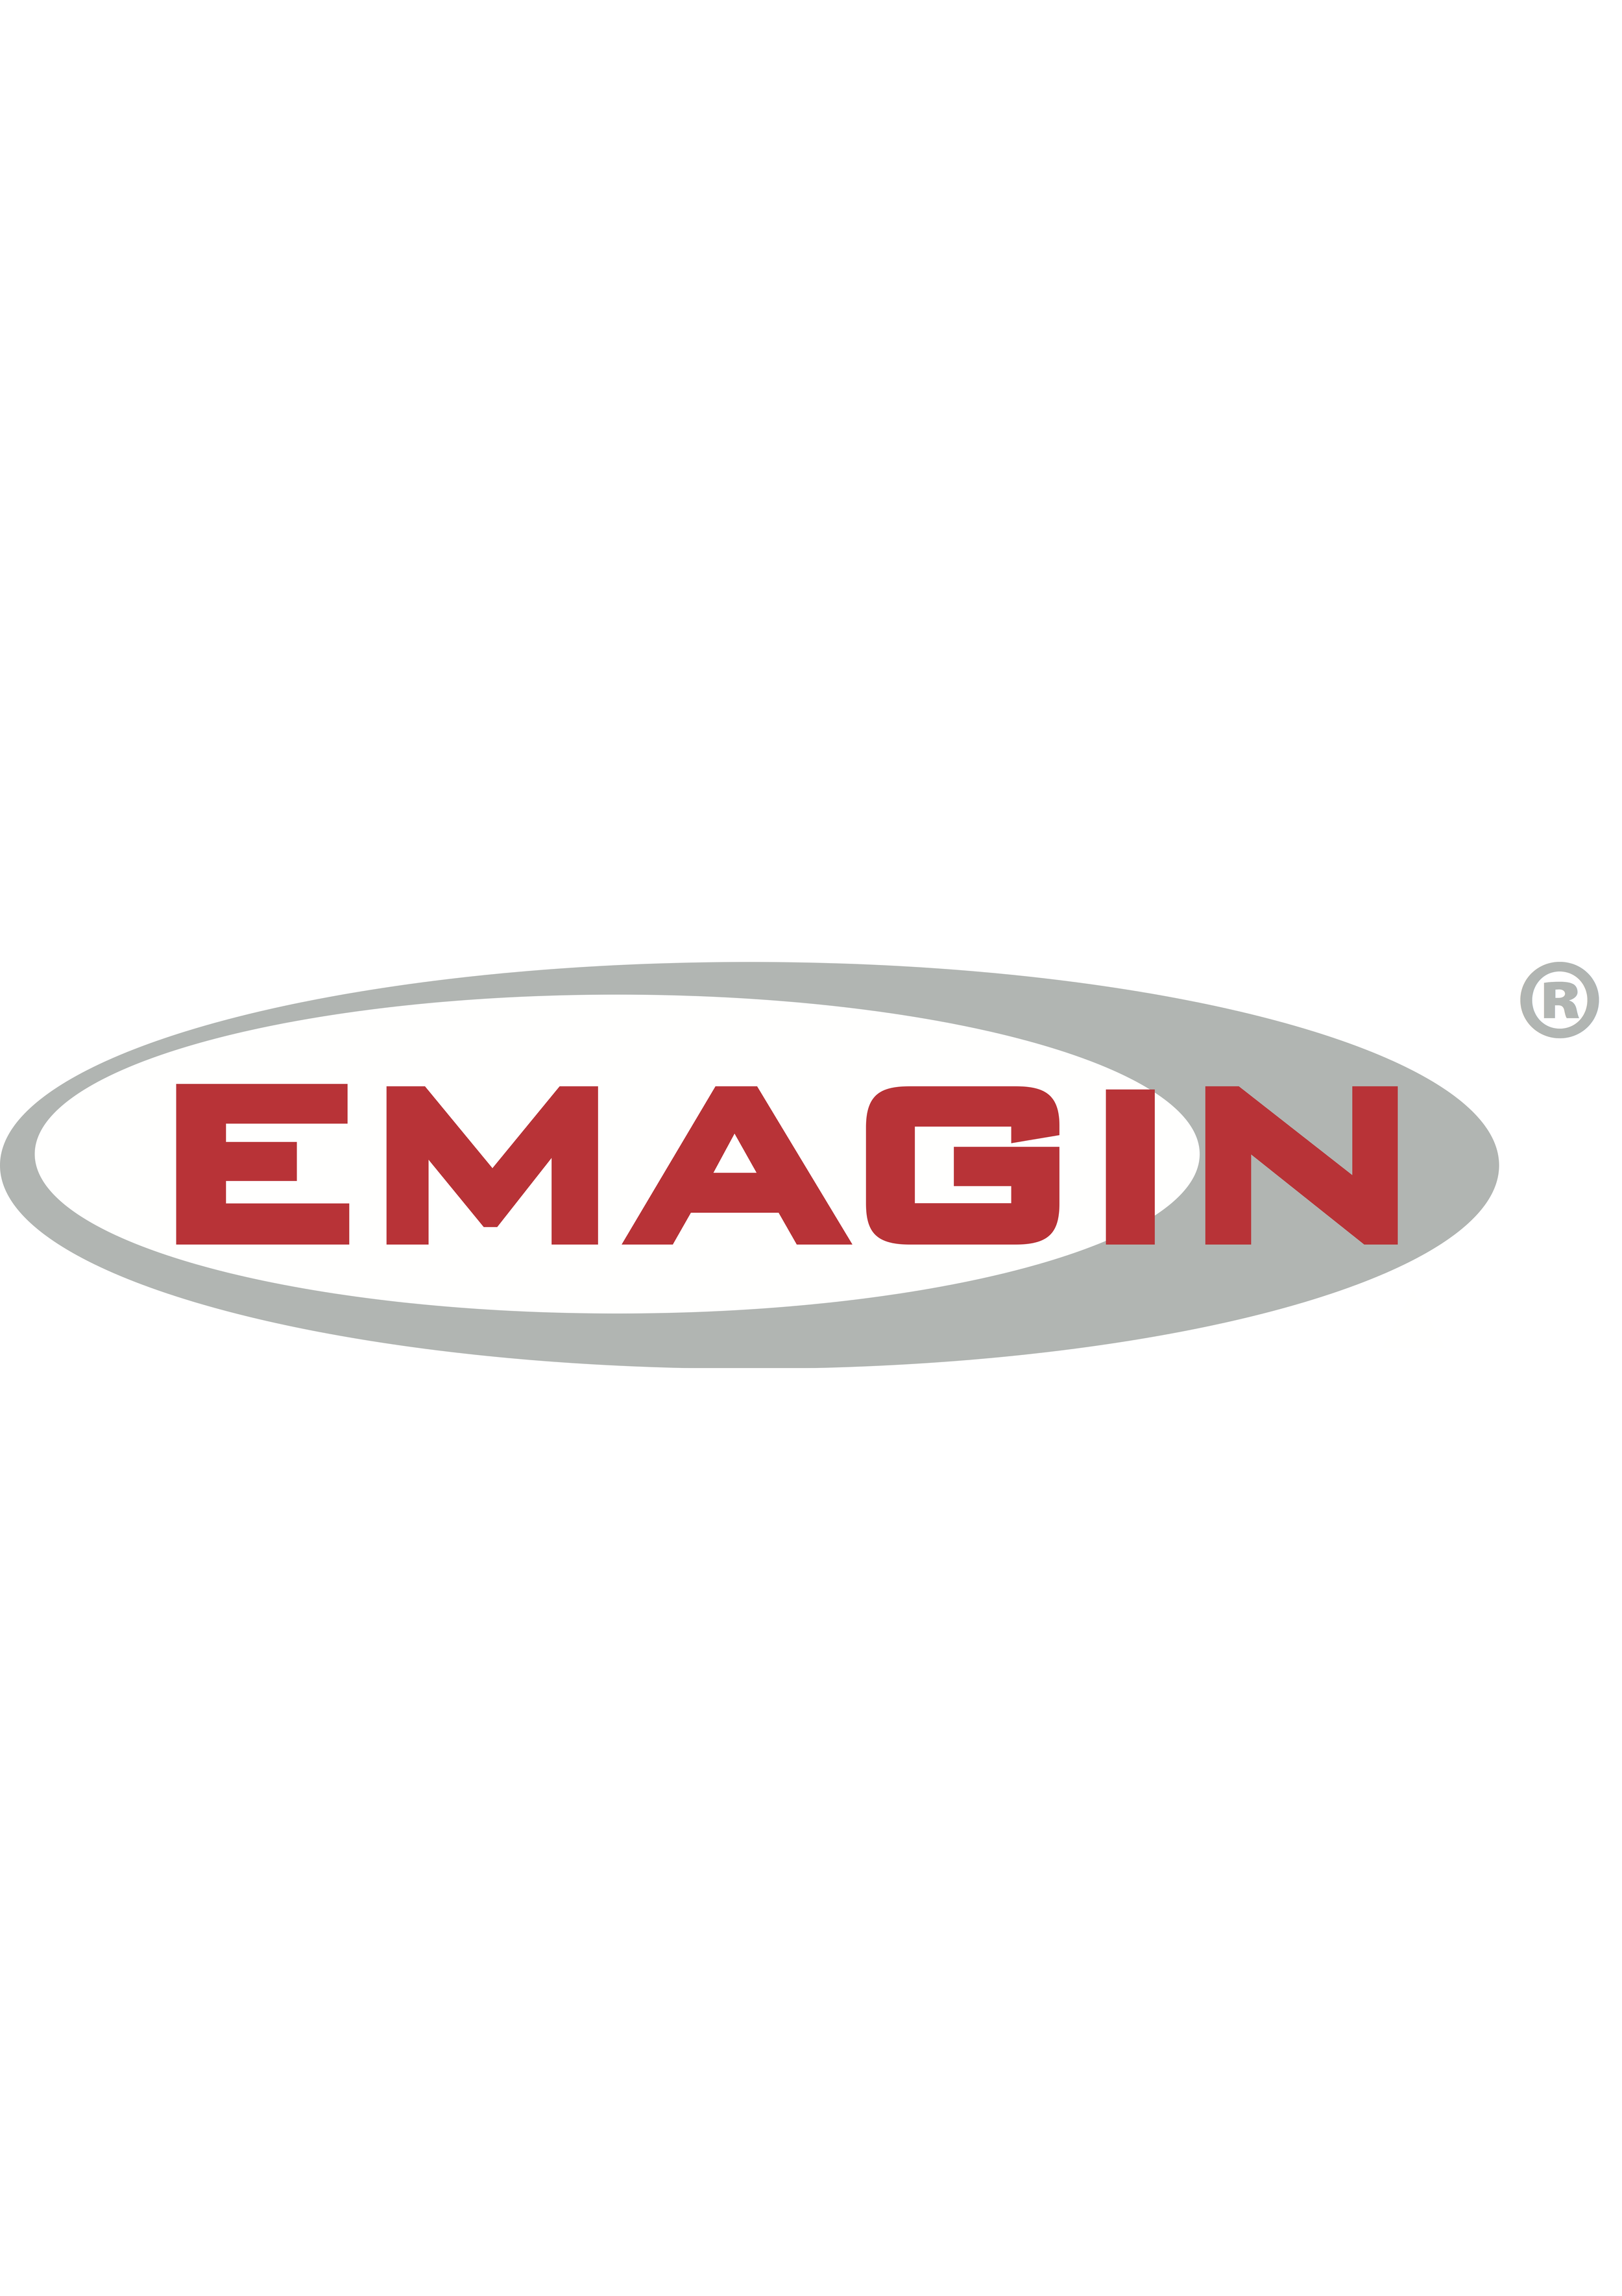 Emagin Logo 2.png